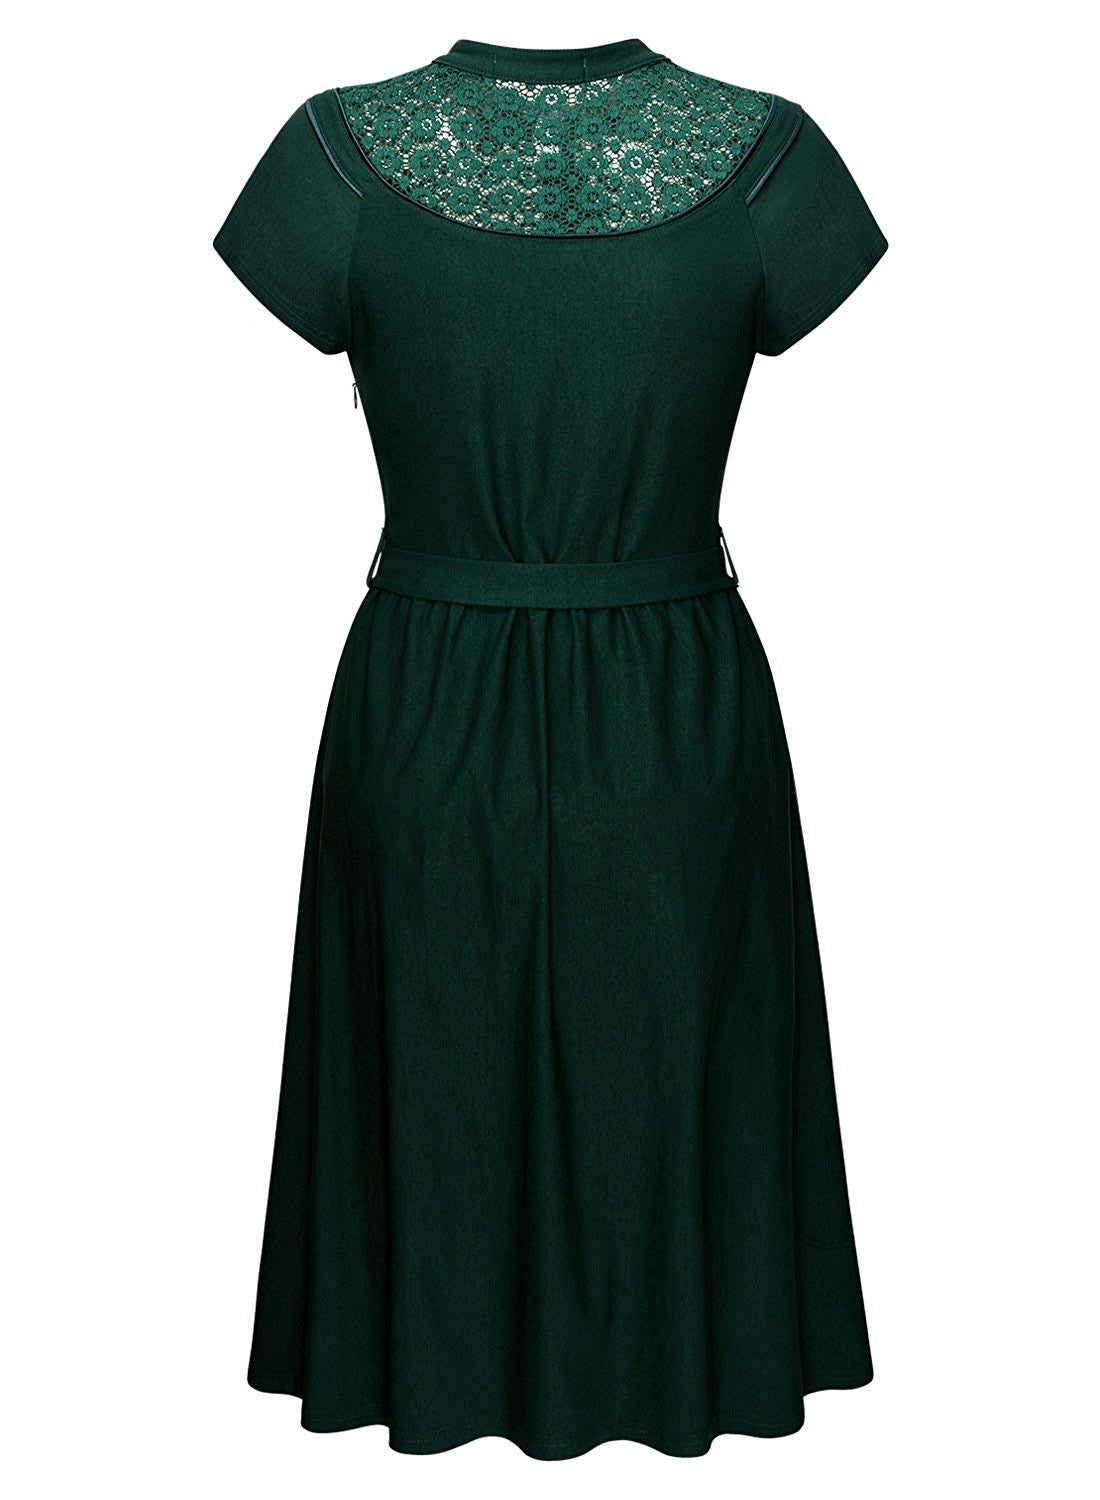 Women’s Vintage 1940S Elegant Lace Short Sleeve A-Line Swing Dress